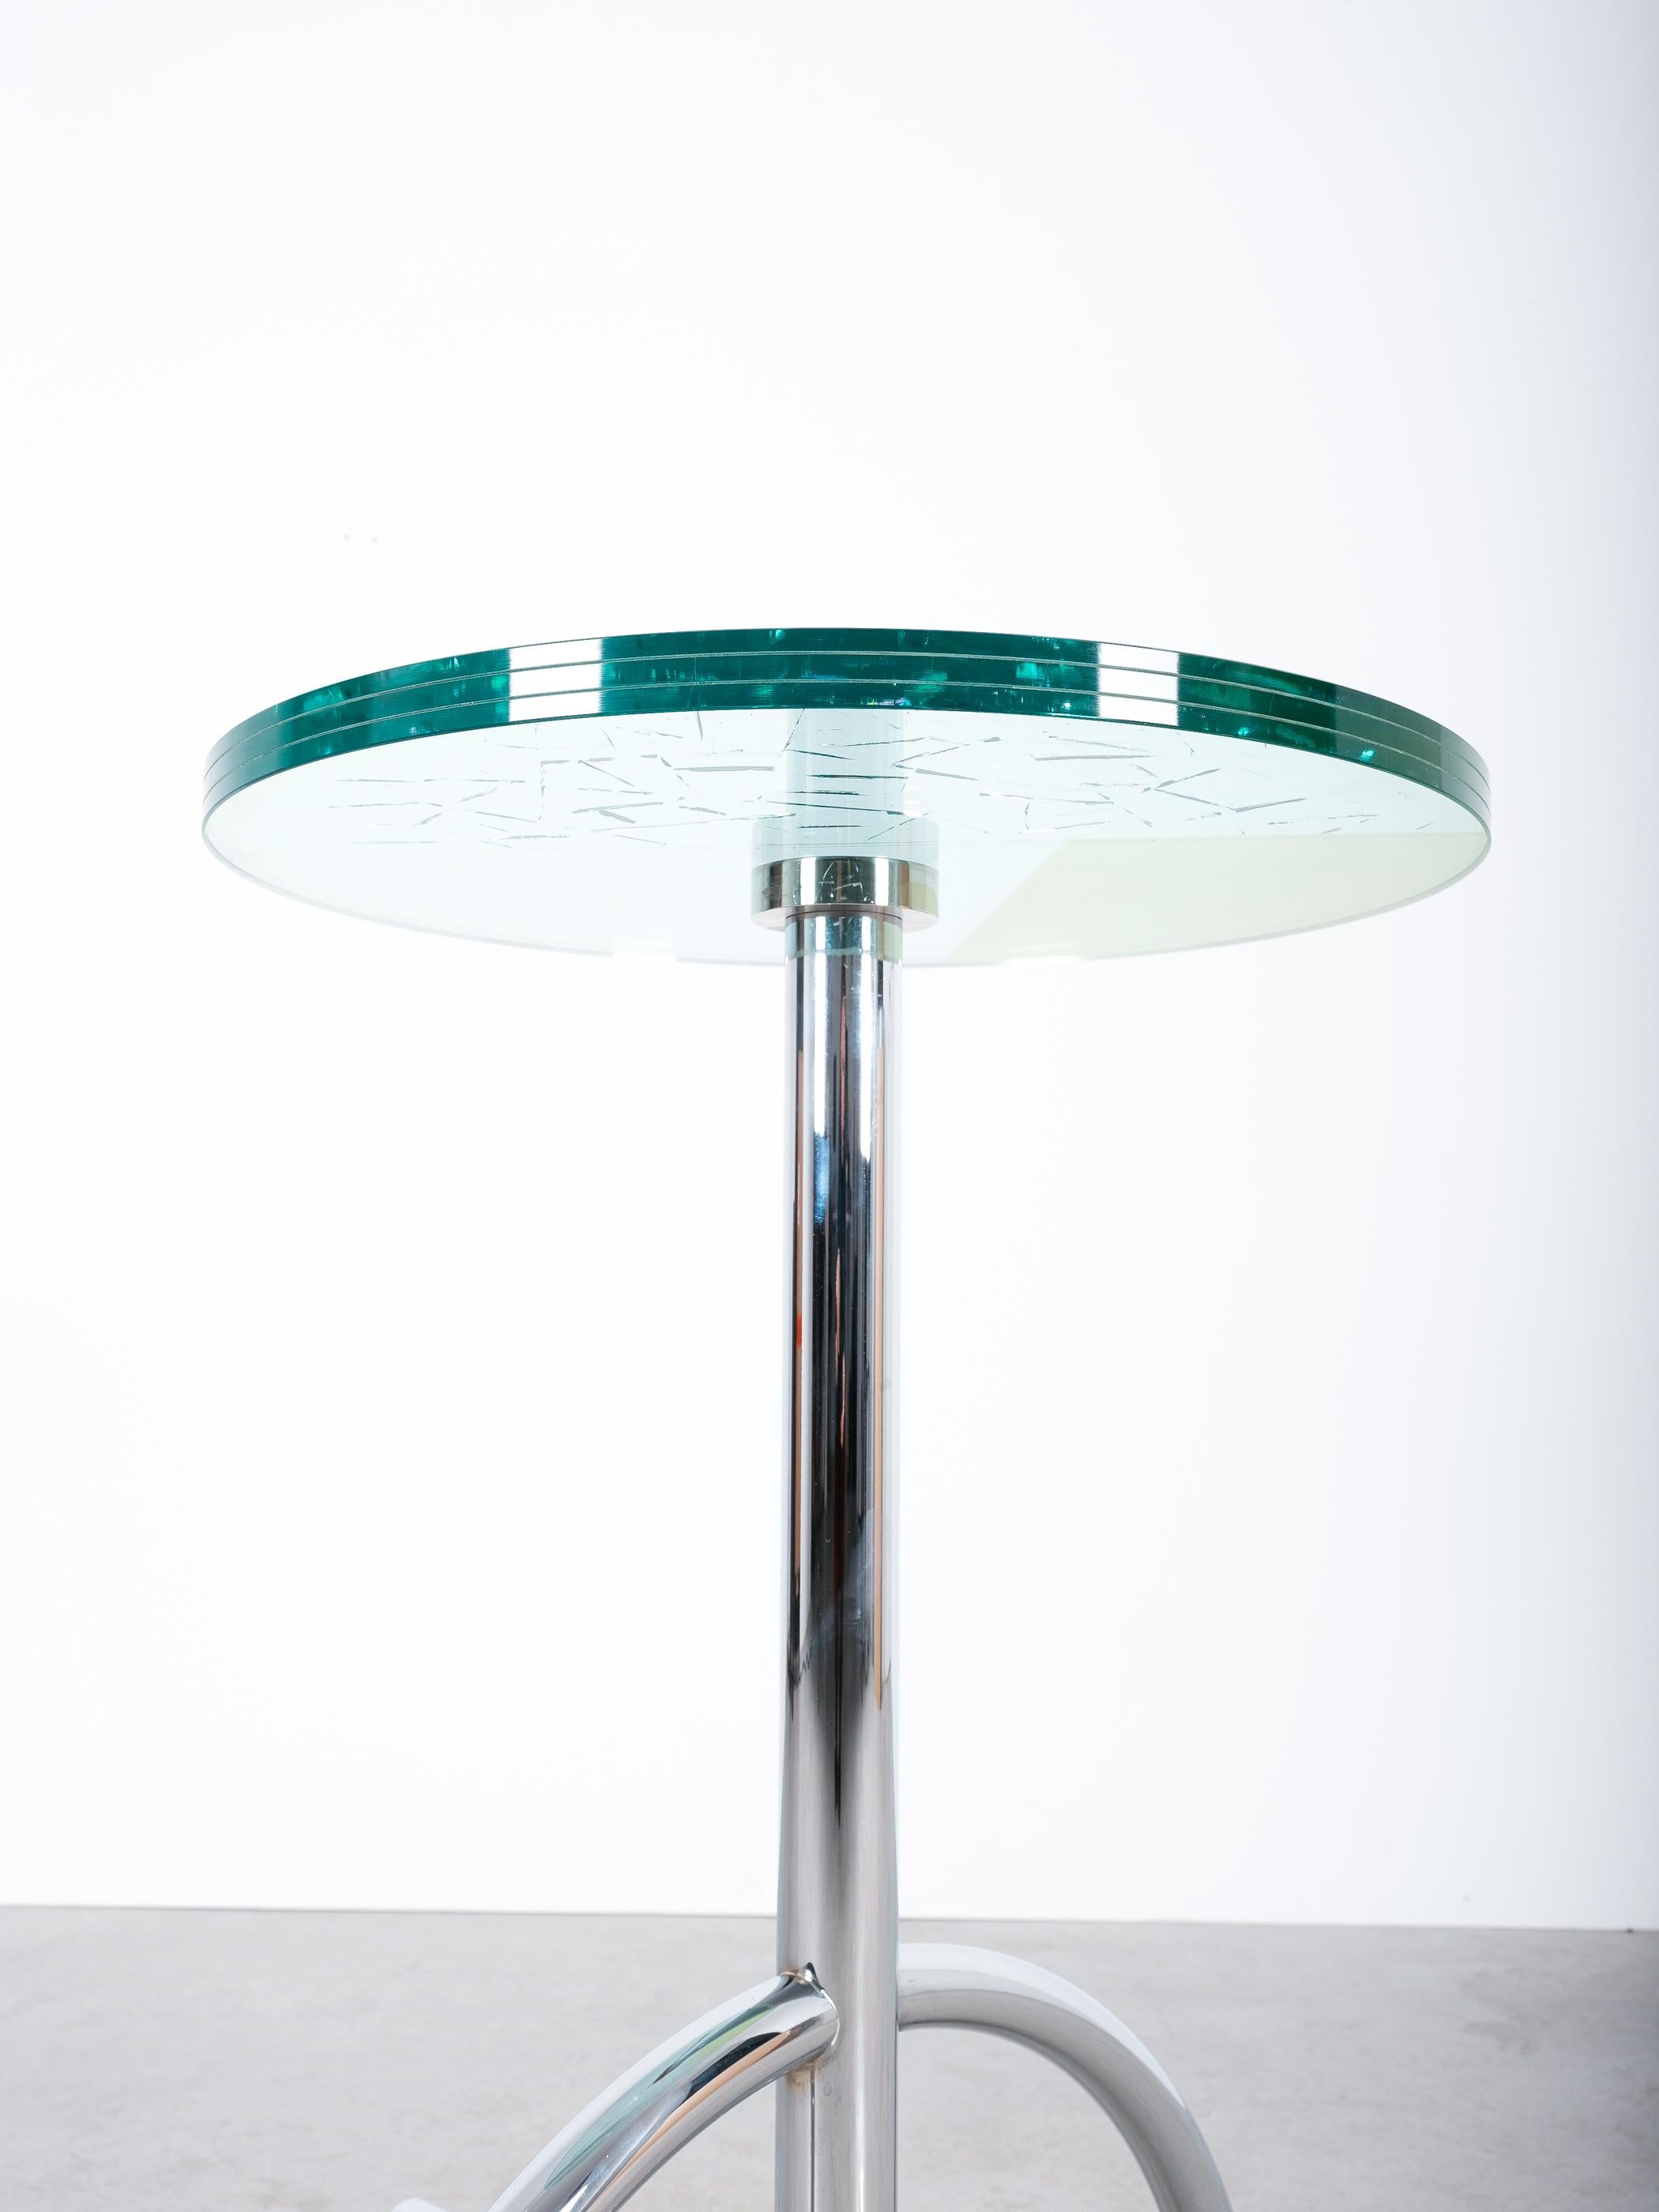 Laminated Memphis Table By Shiro Kuramata Sally Glass Chrome Rolling Table, 1987 For Sale